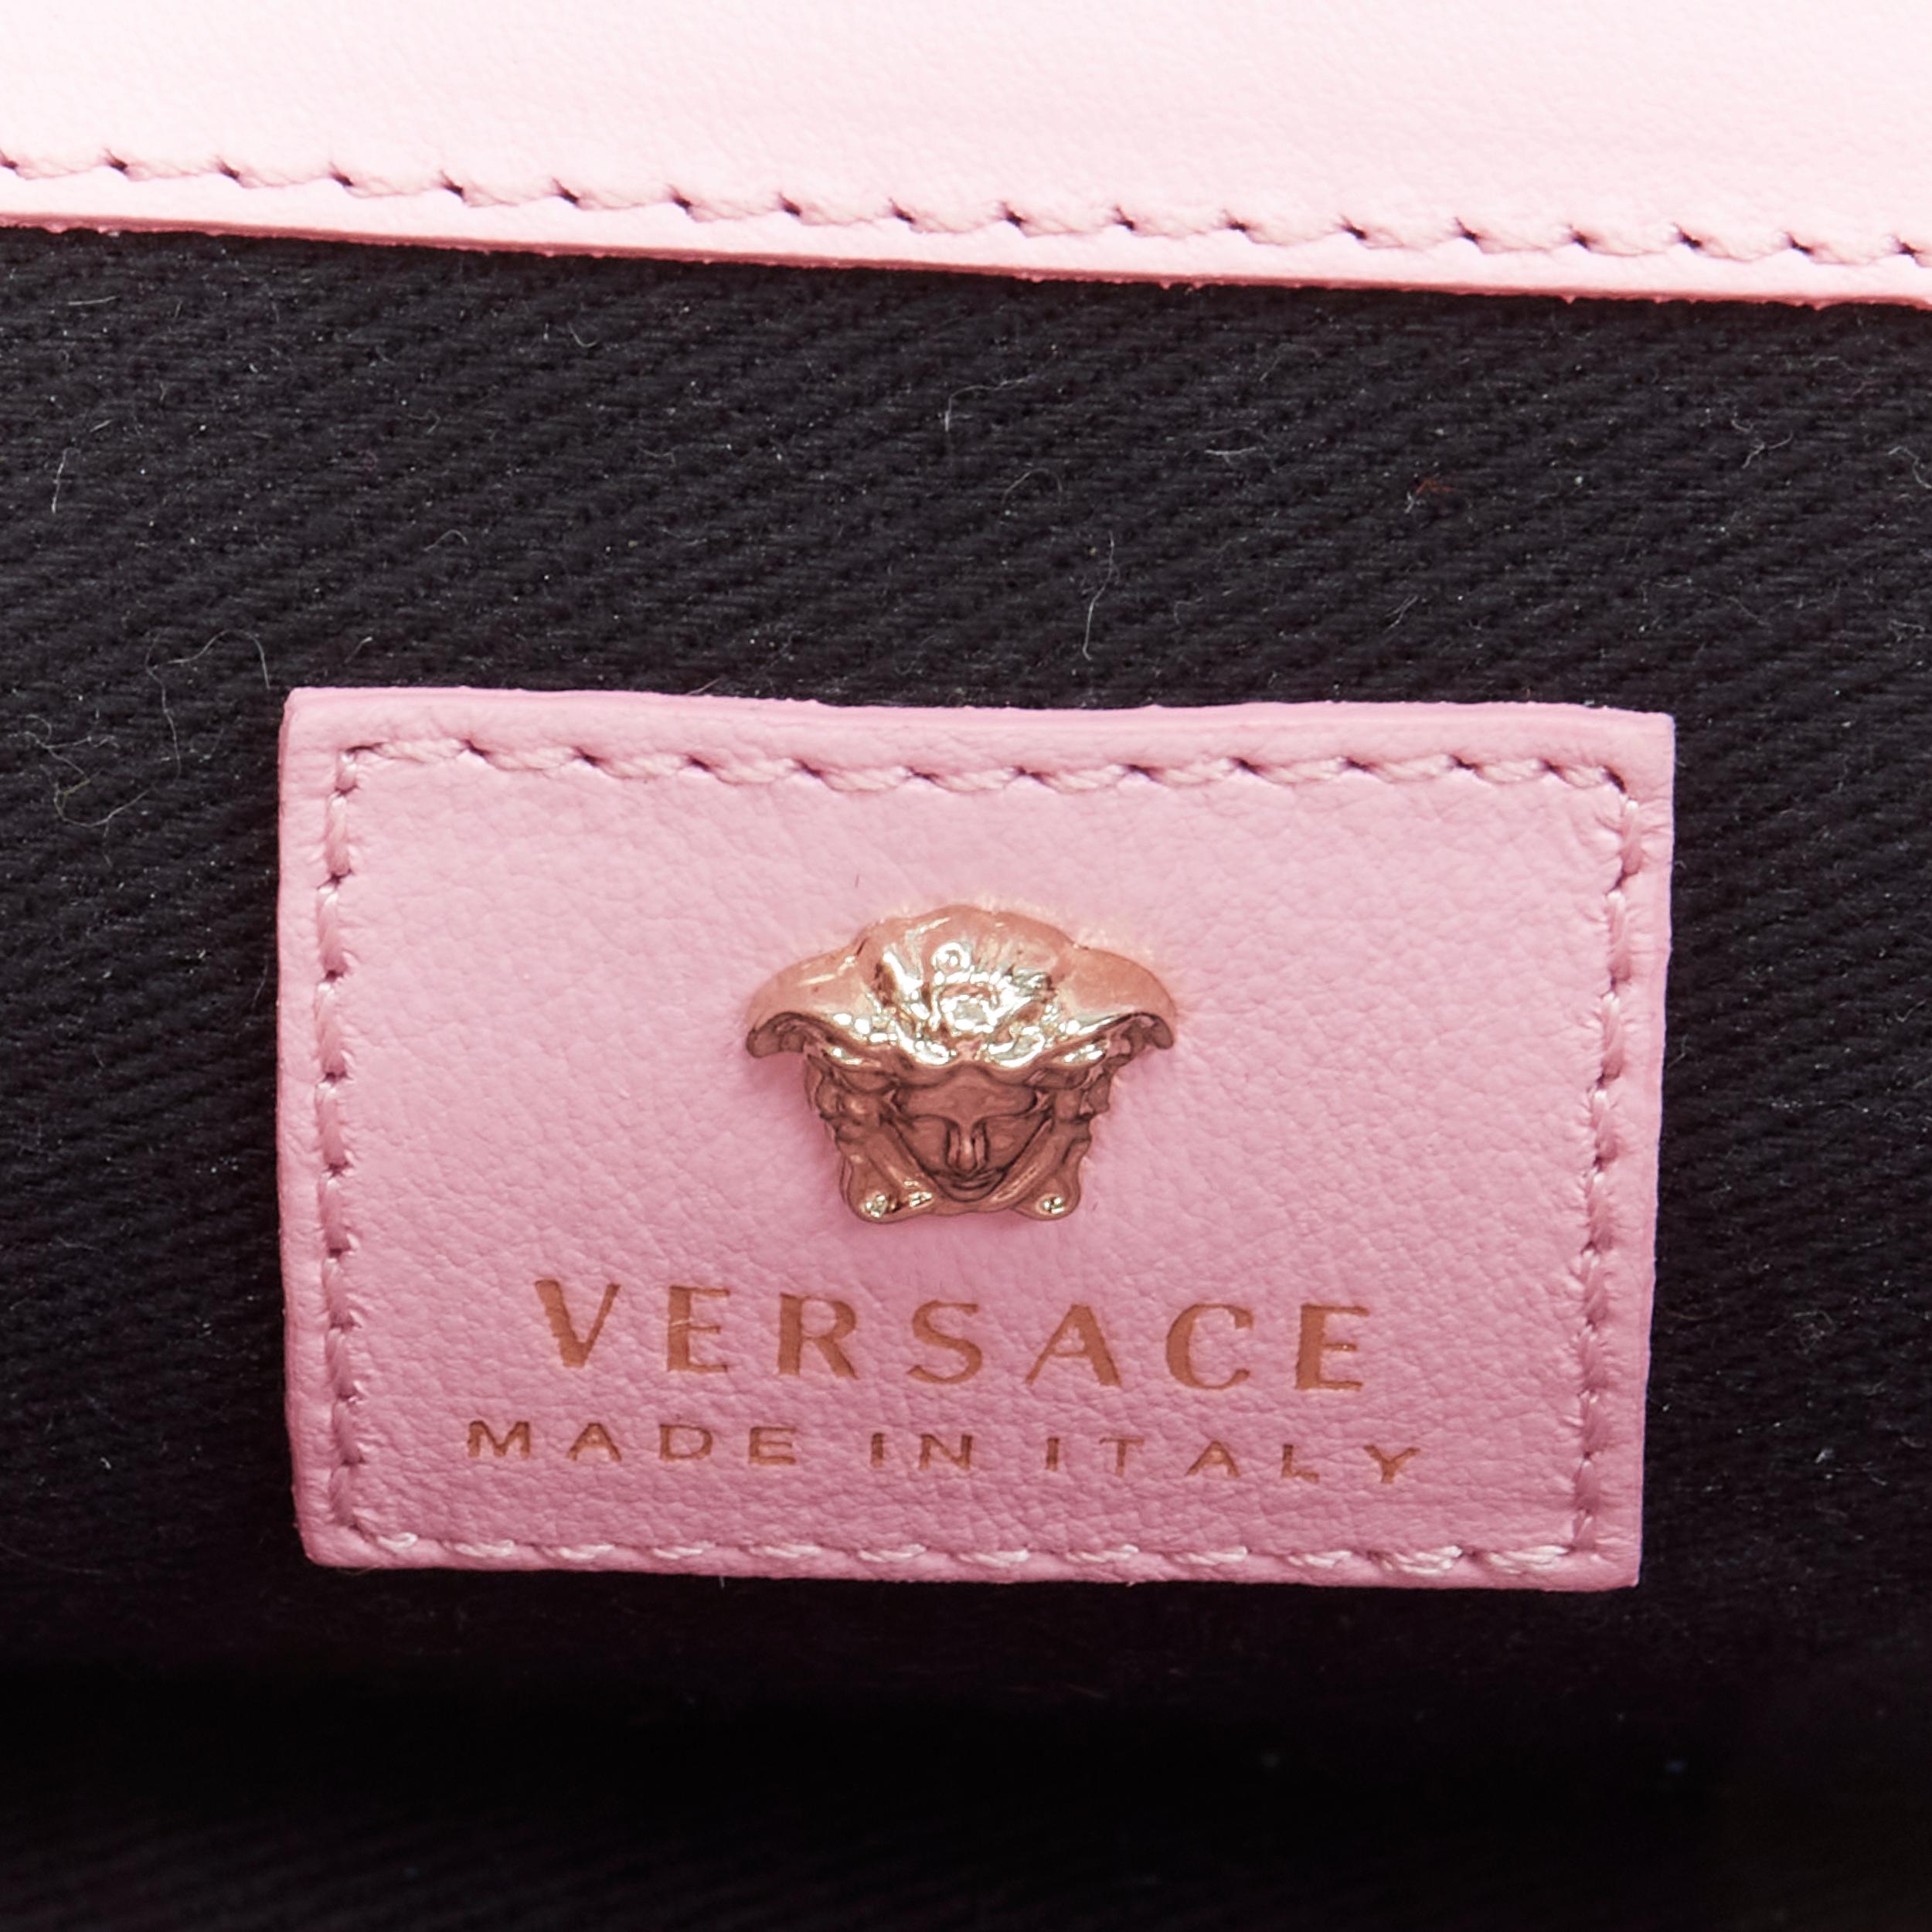 VERSACE Medusa Palazzo gold emblem pink strass crystal embellished crossbody bag 2